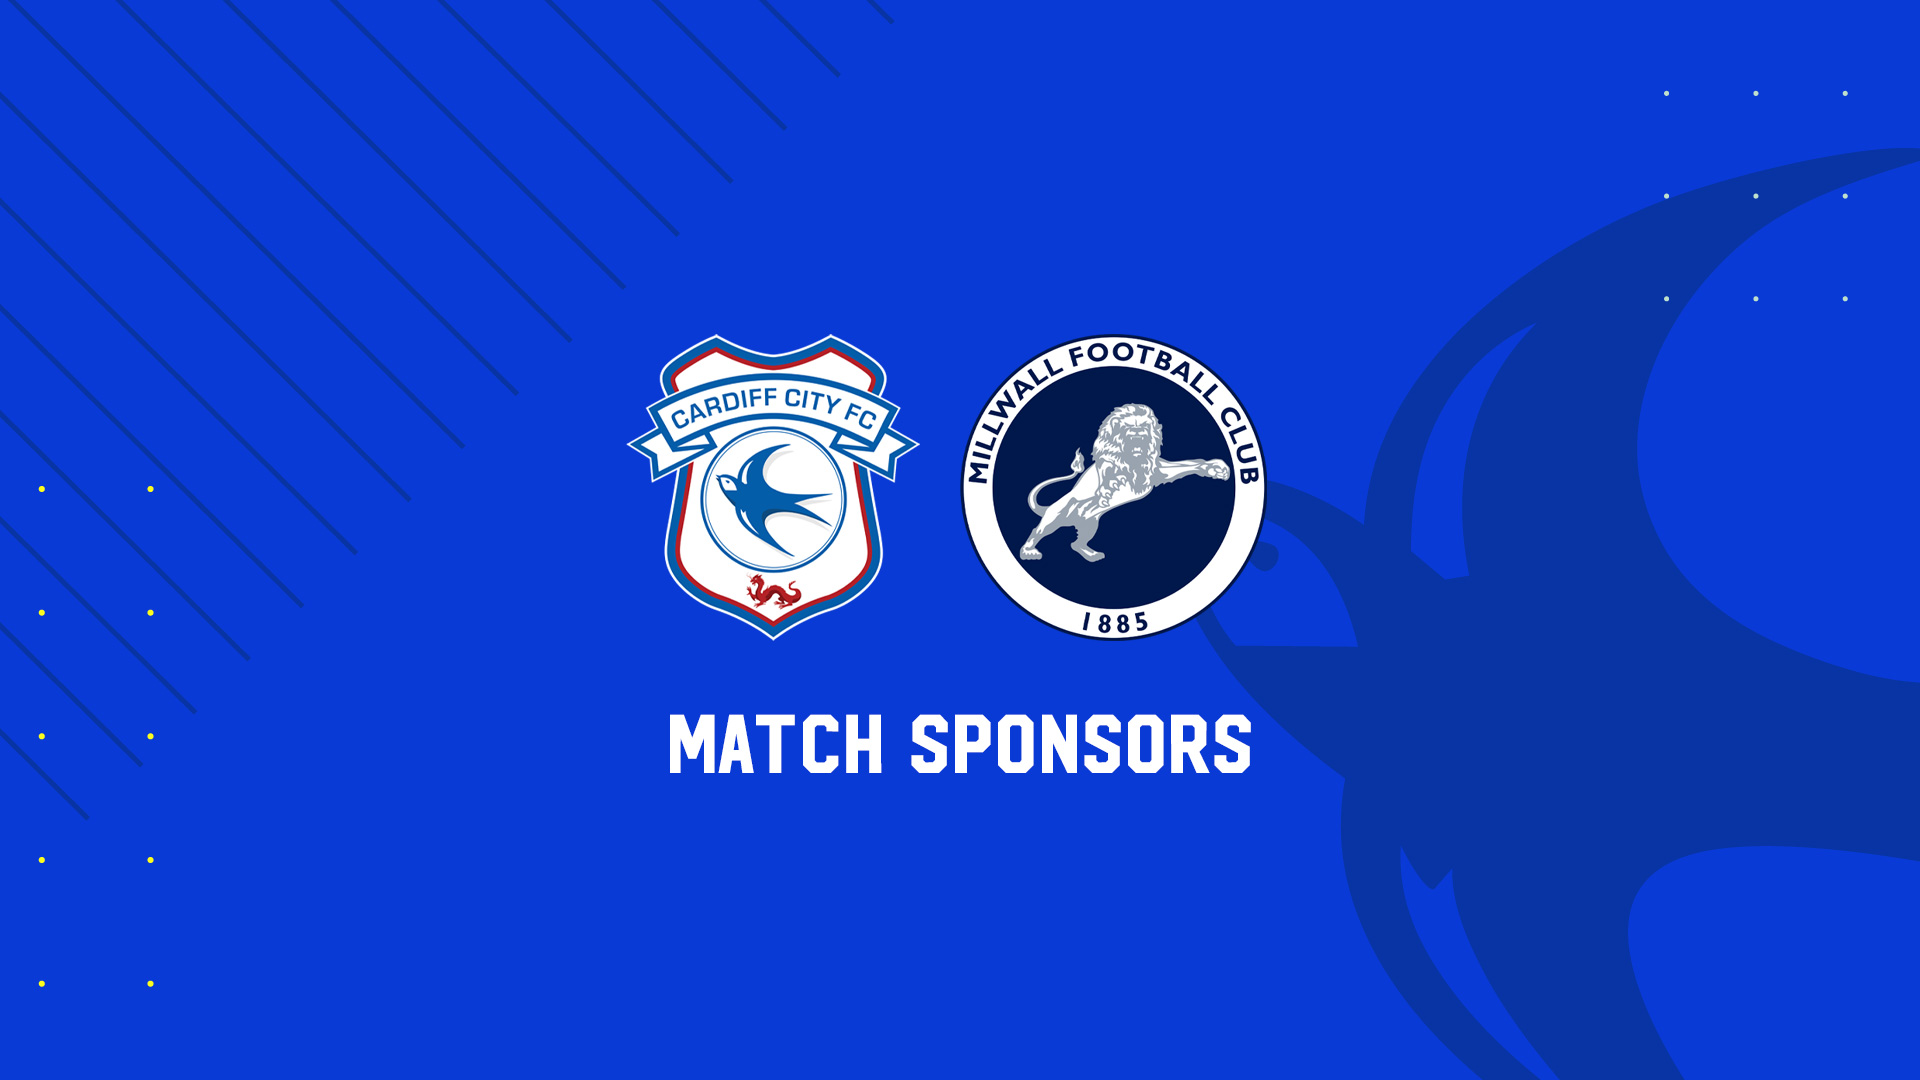 Match Sponsors: Cardiff City vs. Millwall